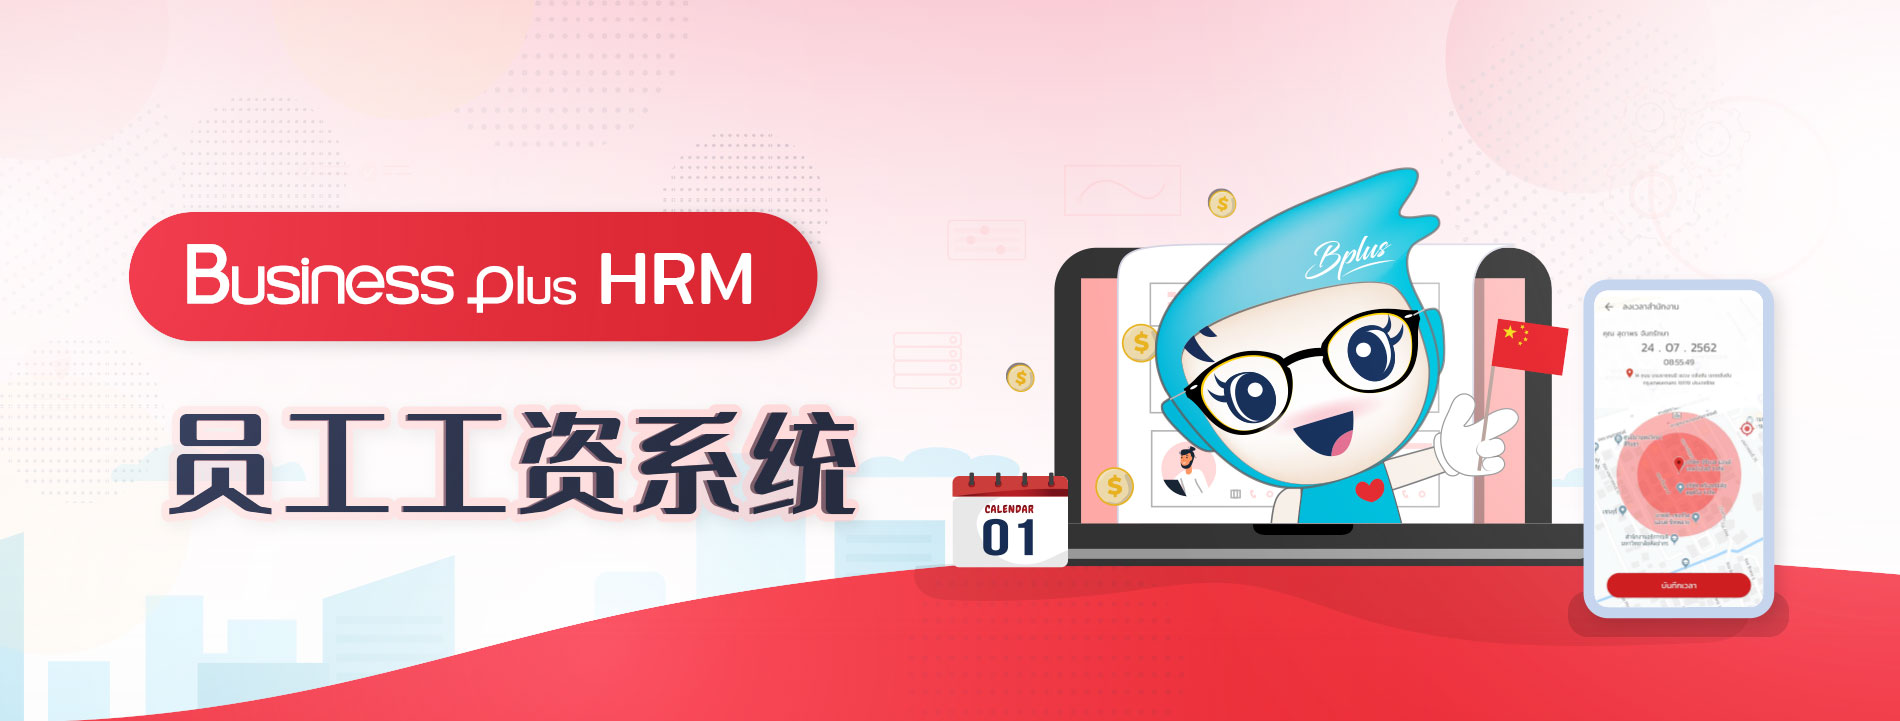 Banner_HRM-China.jpg